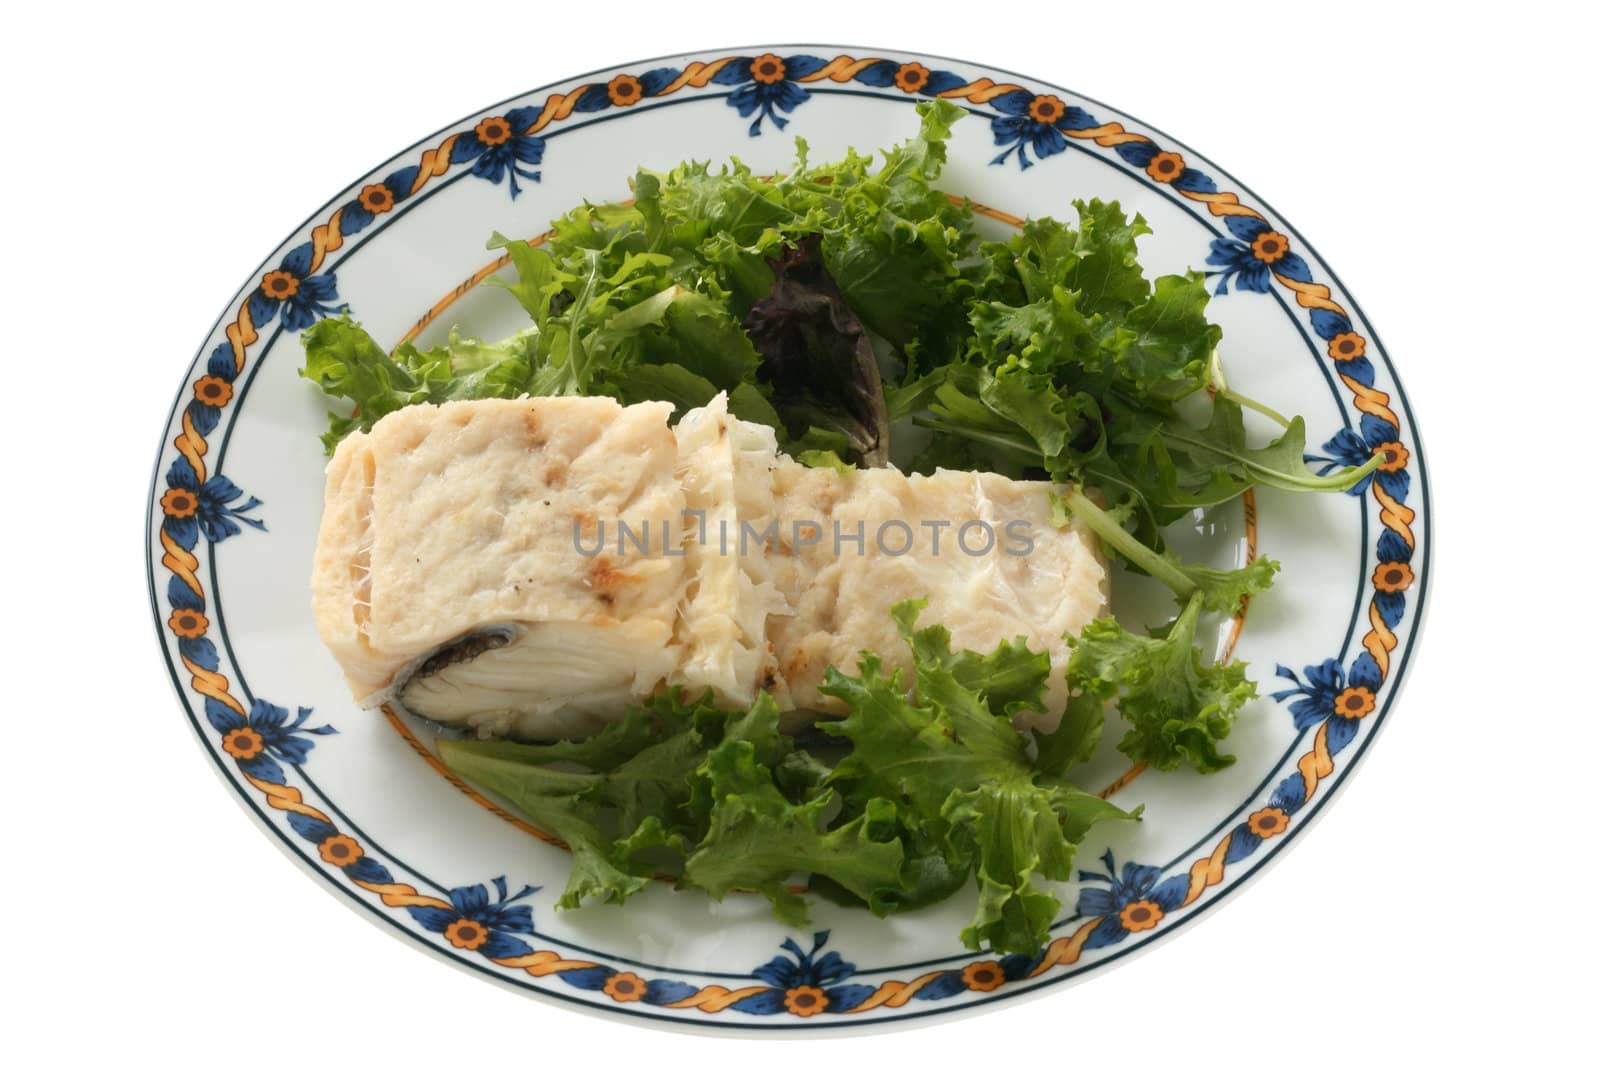 Boiled codfish with salad by nataliamylova